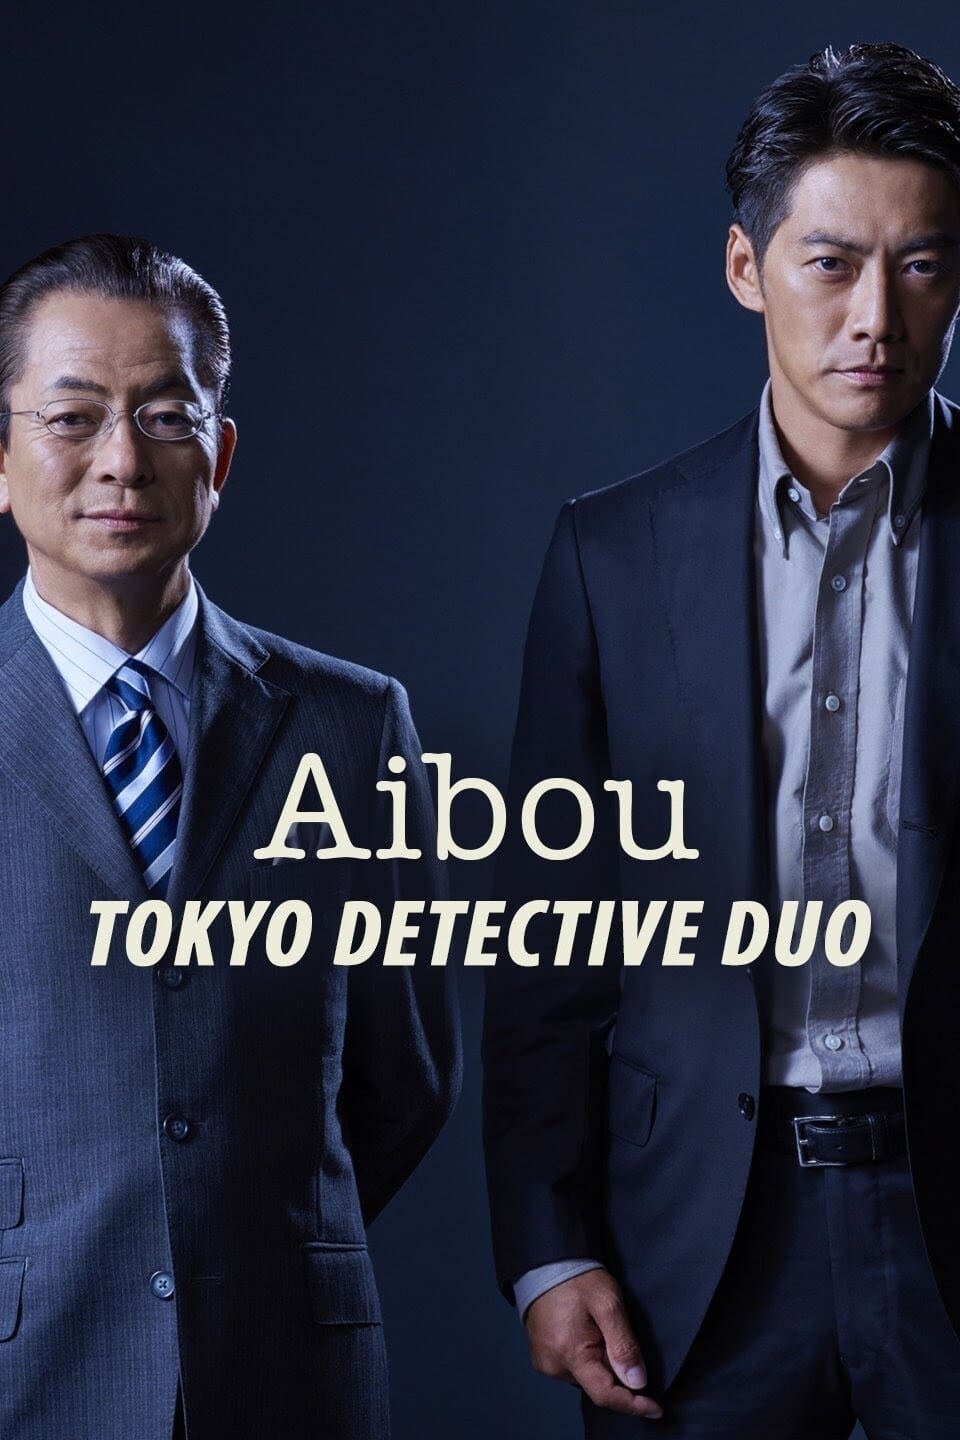 Aibou: Tokyo Detective Duo (相棒)